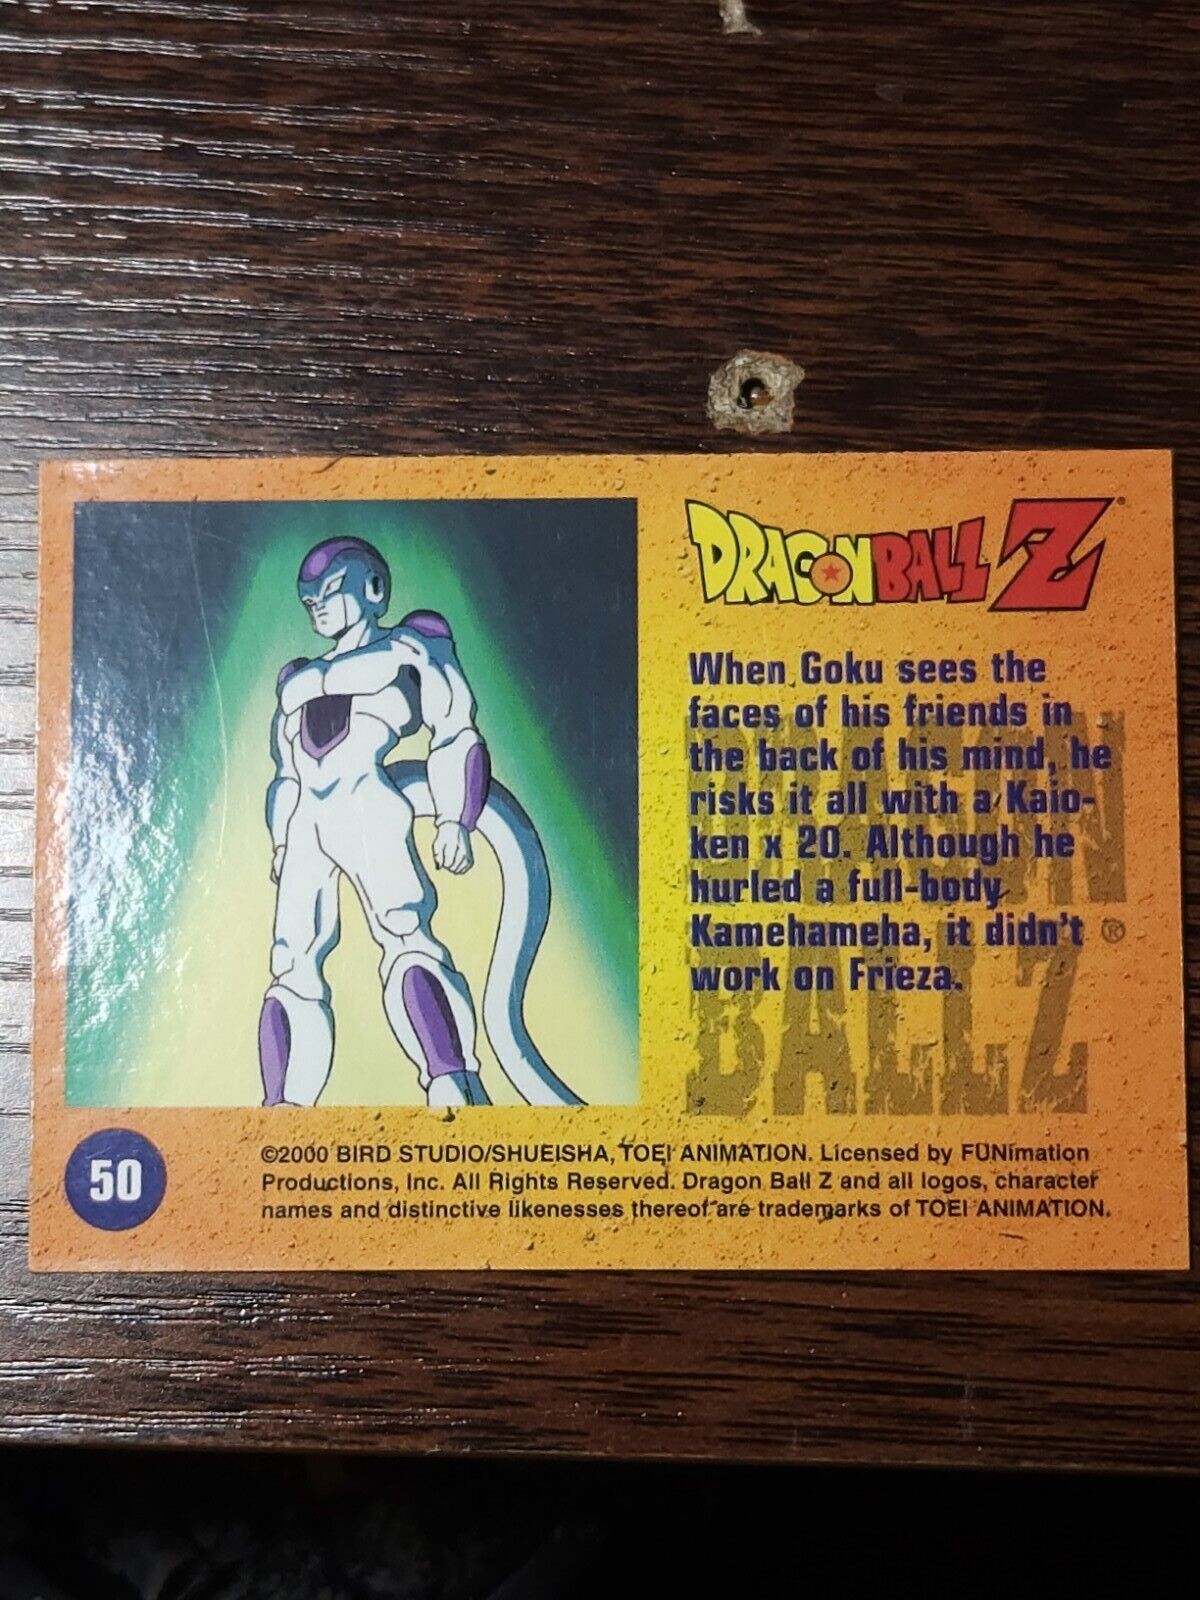 Dragon Ball Z Chromium Archive - Card #50 - Artbox 2000 Errors & Oddities